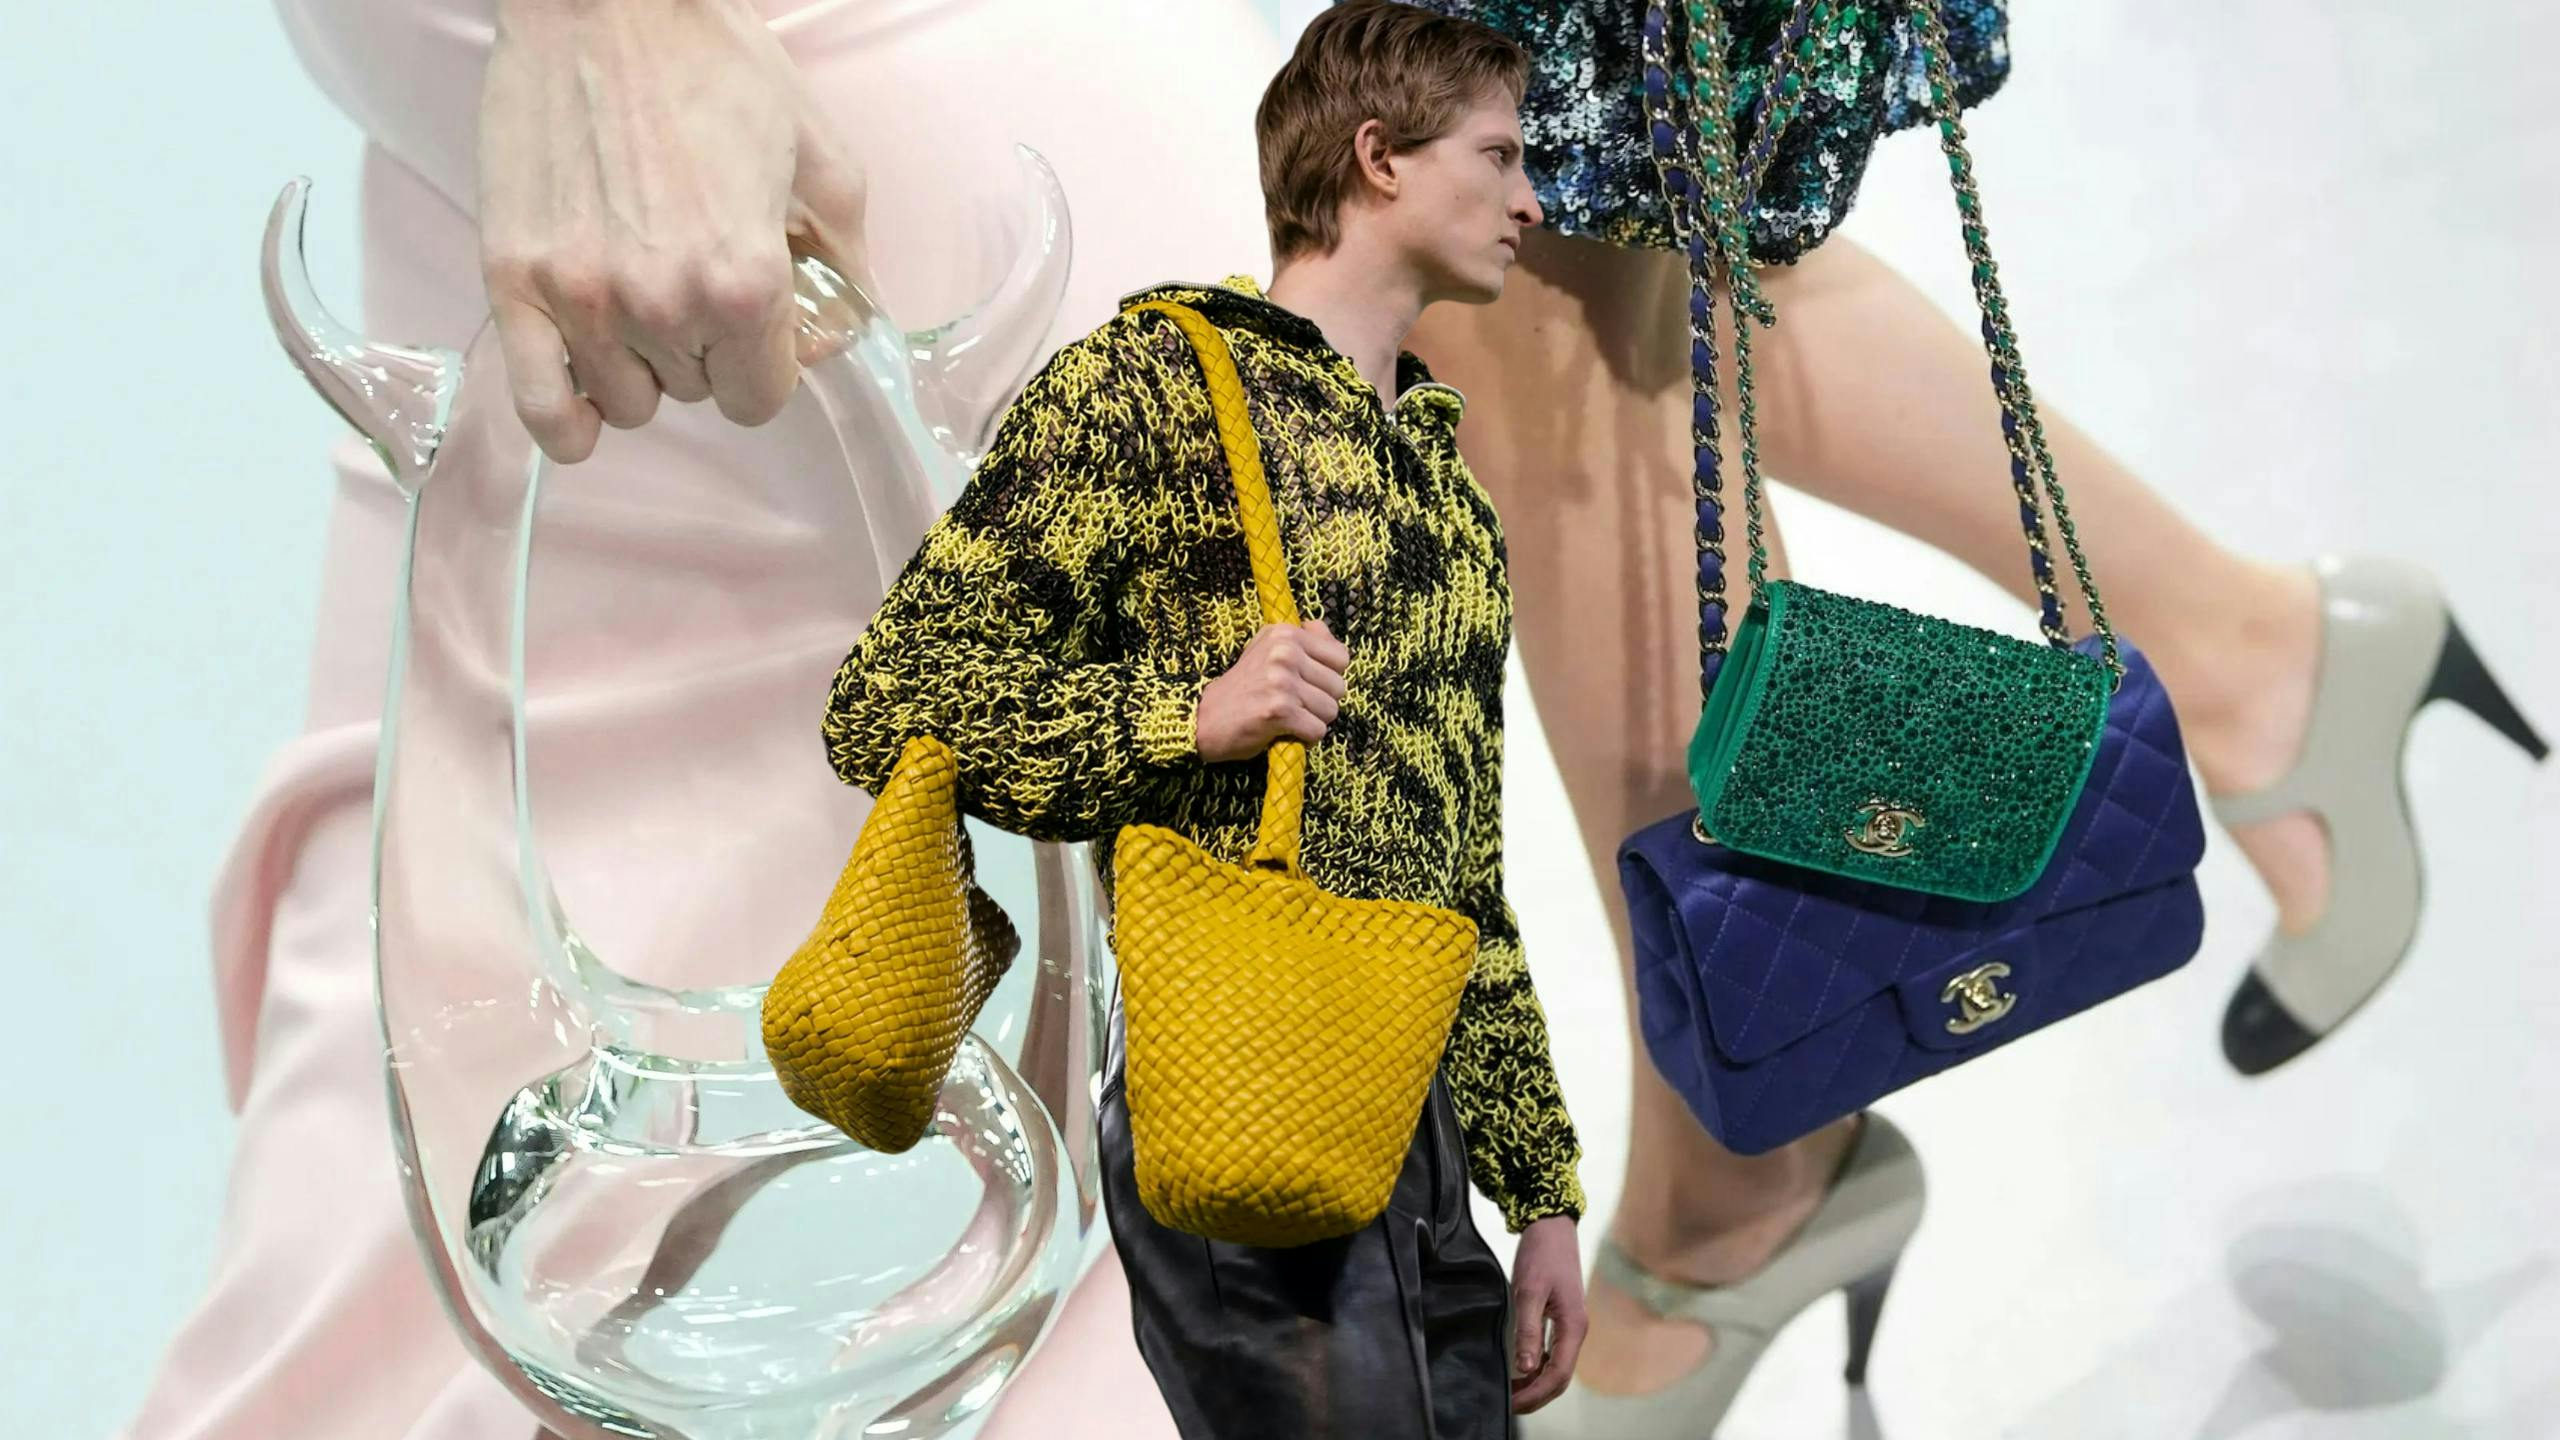 accessories accessory person human handbag bag clothing apparel purse